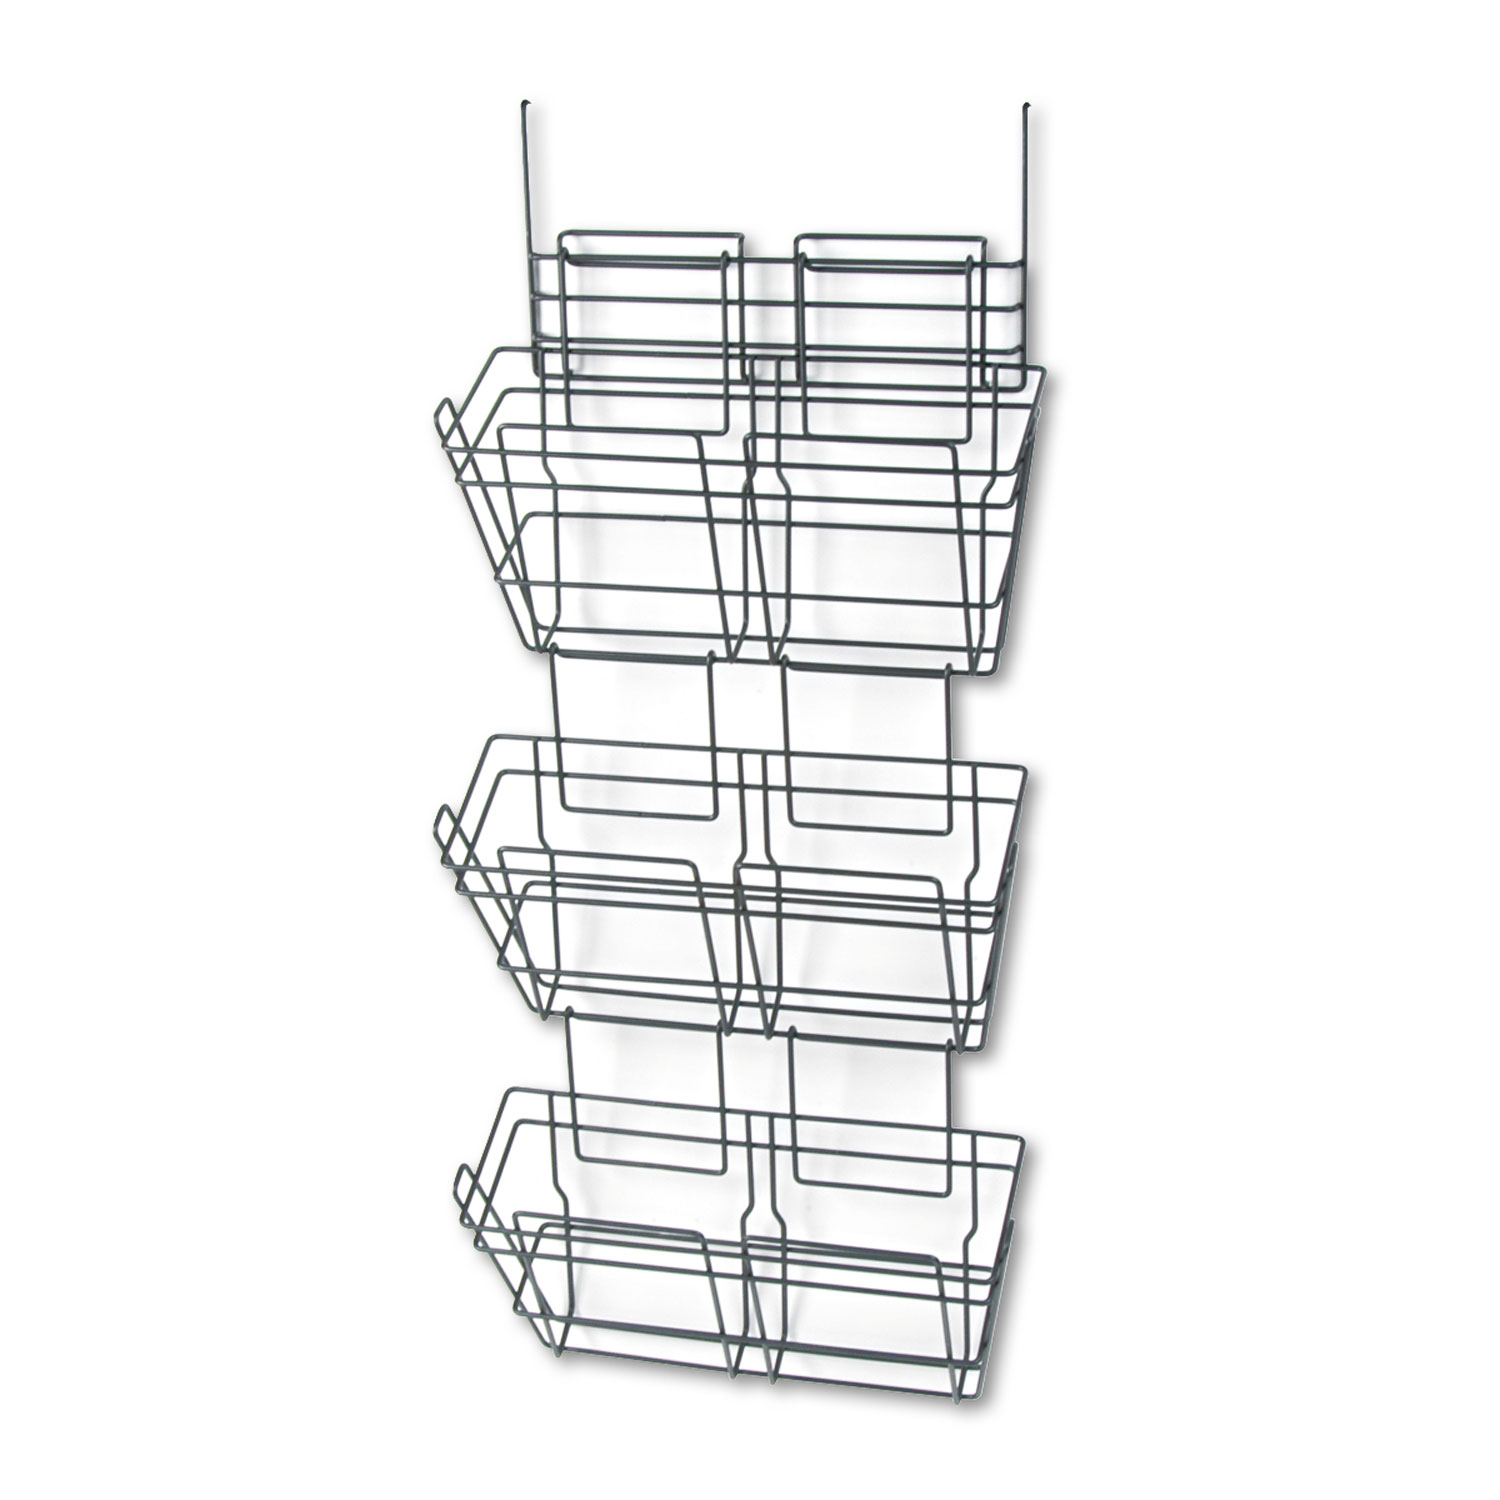  Safco 4151CH Panelmate Triple-File Basket Organizer, 15 1/2 x 29 1/2, Charcoal Gray (SAF4151CH) 